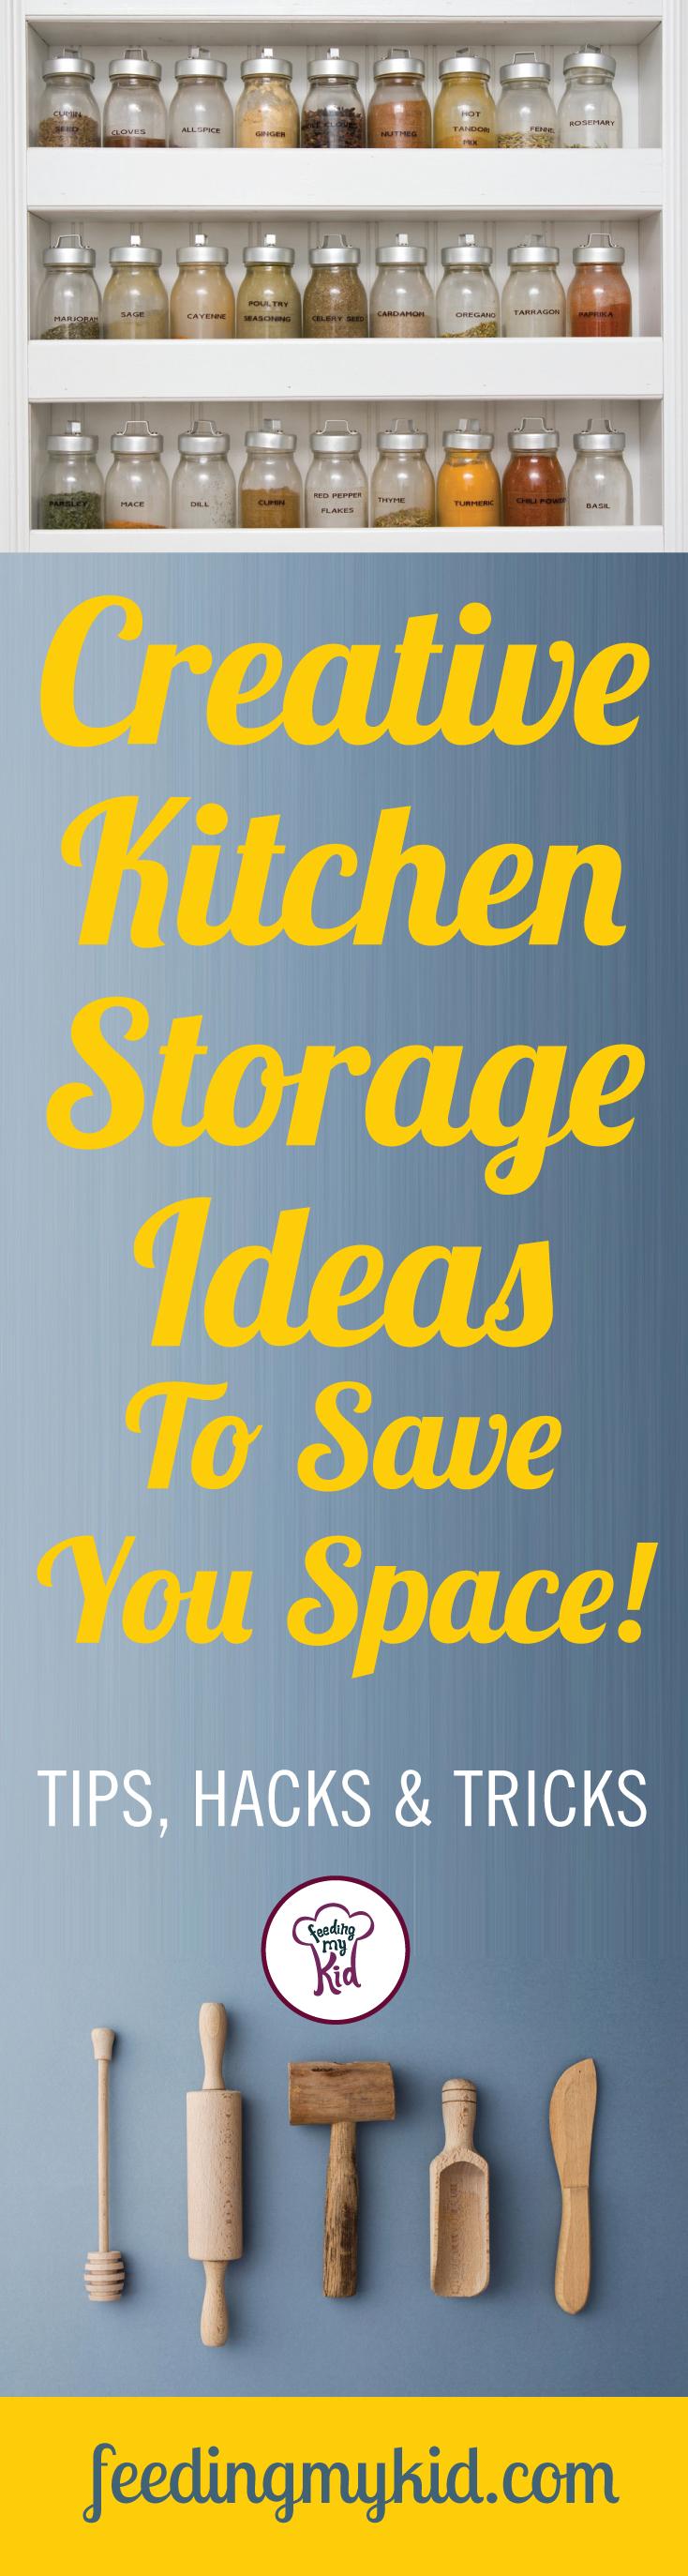 Creative Kitchen Storage Ideas To Save You Space! Tips, Hacks & Tricks.